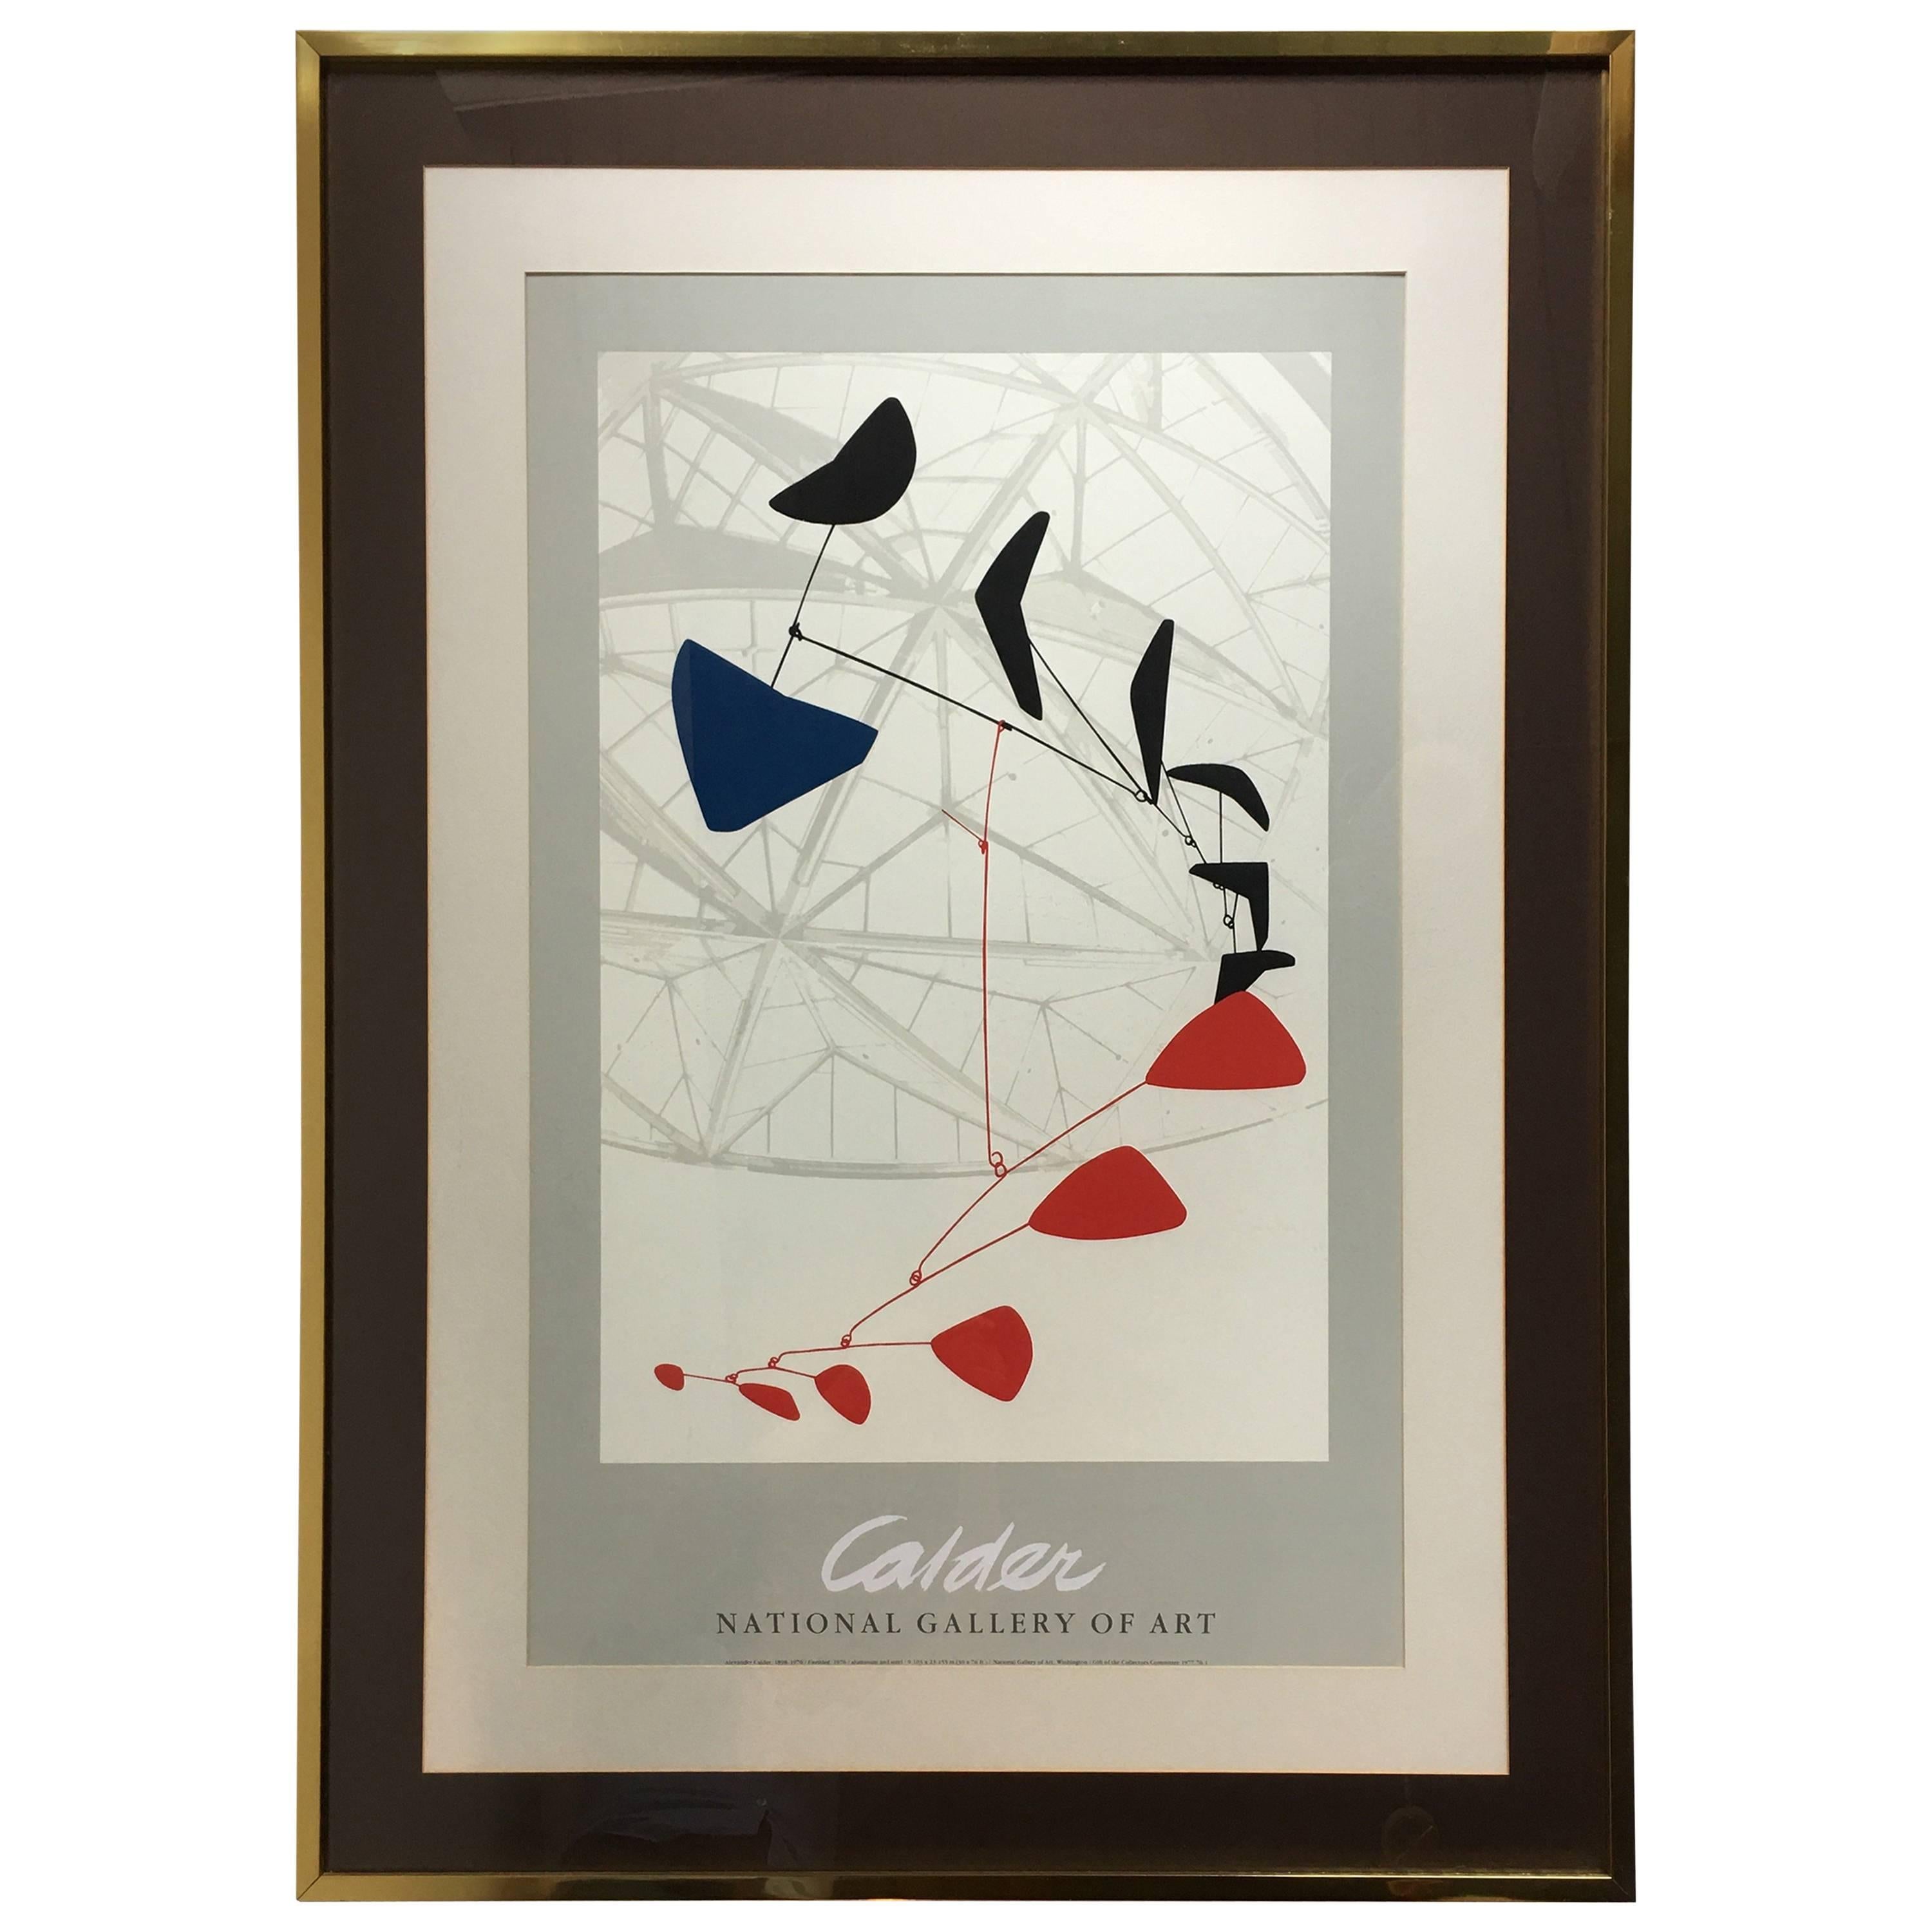 Alexander Calder Exhibition Poster, 1977